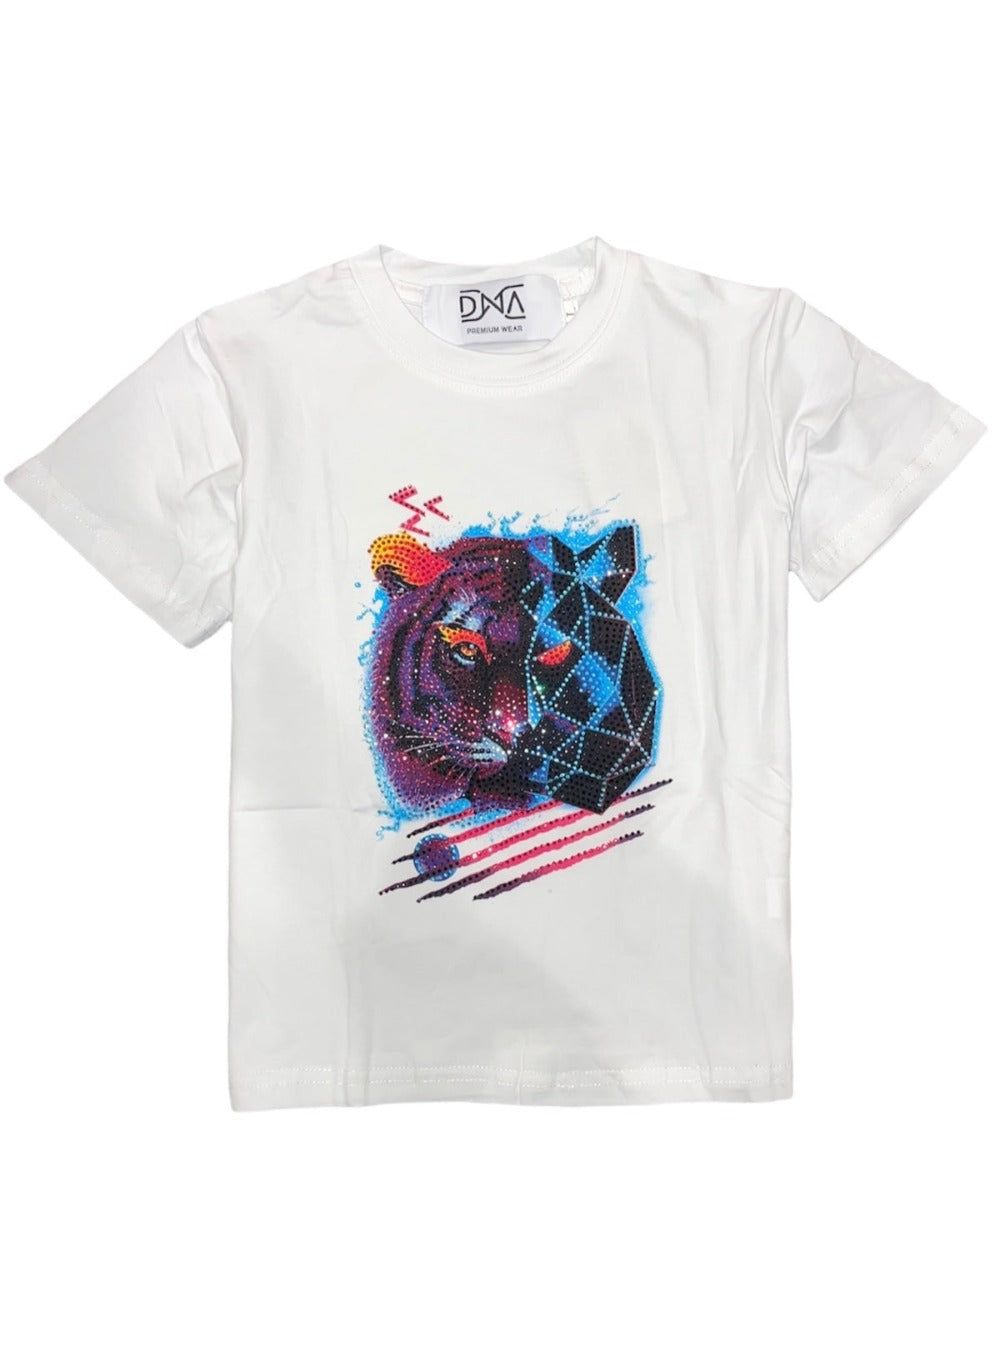 DNA Kids T-Shirt Lion White Multi Color Tiger Graphic